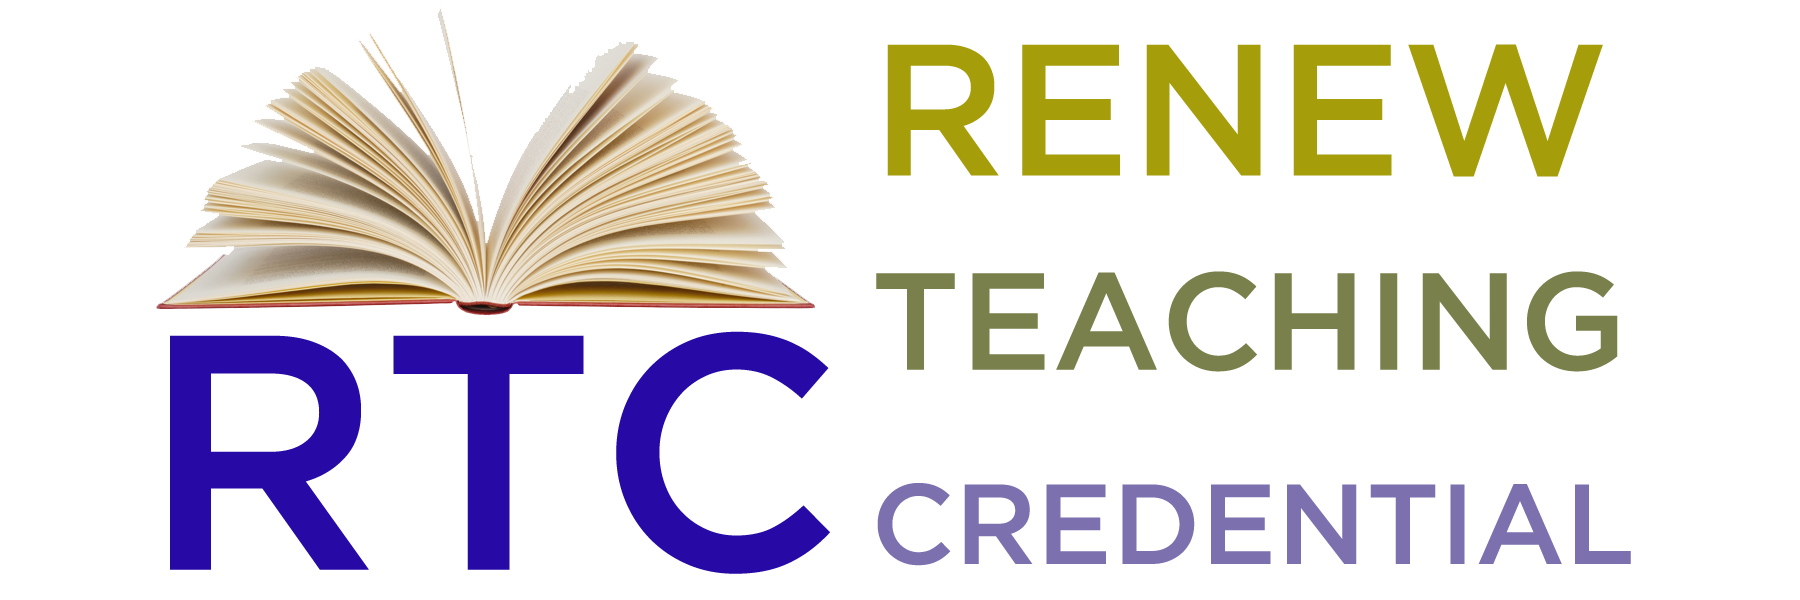 Renew Teaching Credential